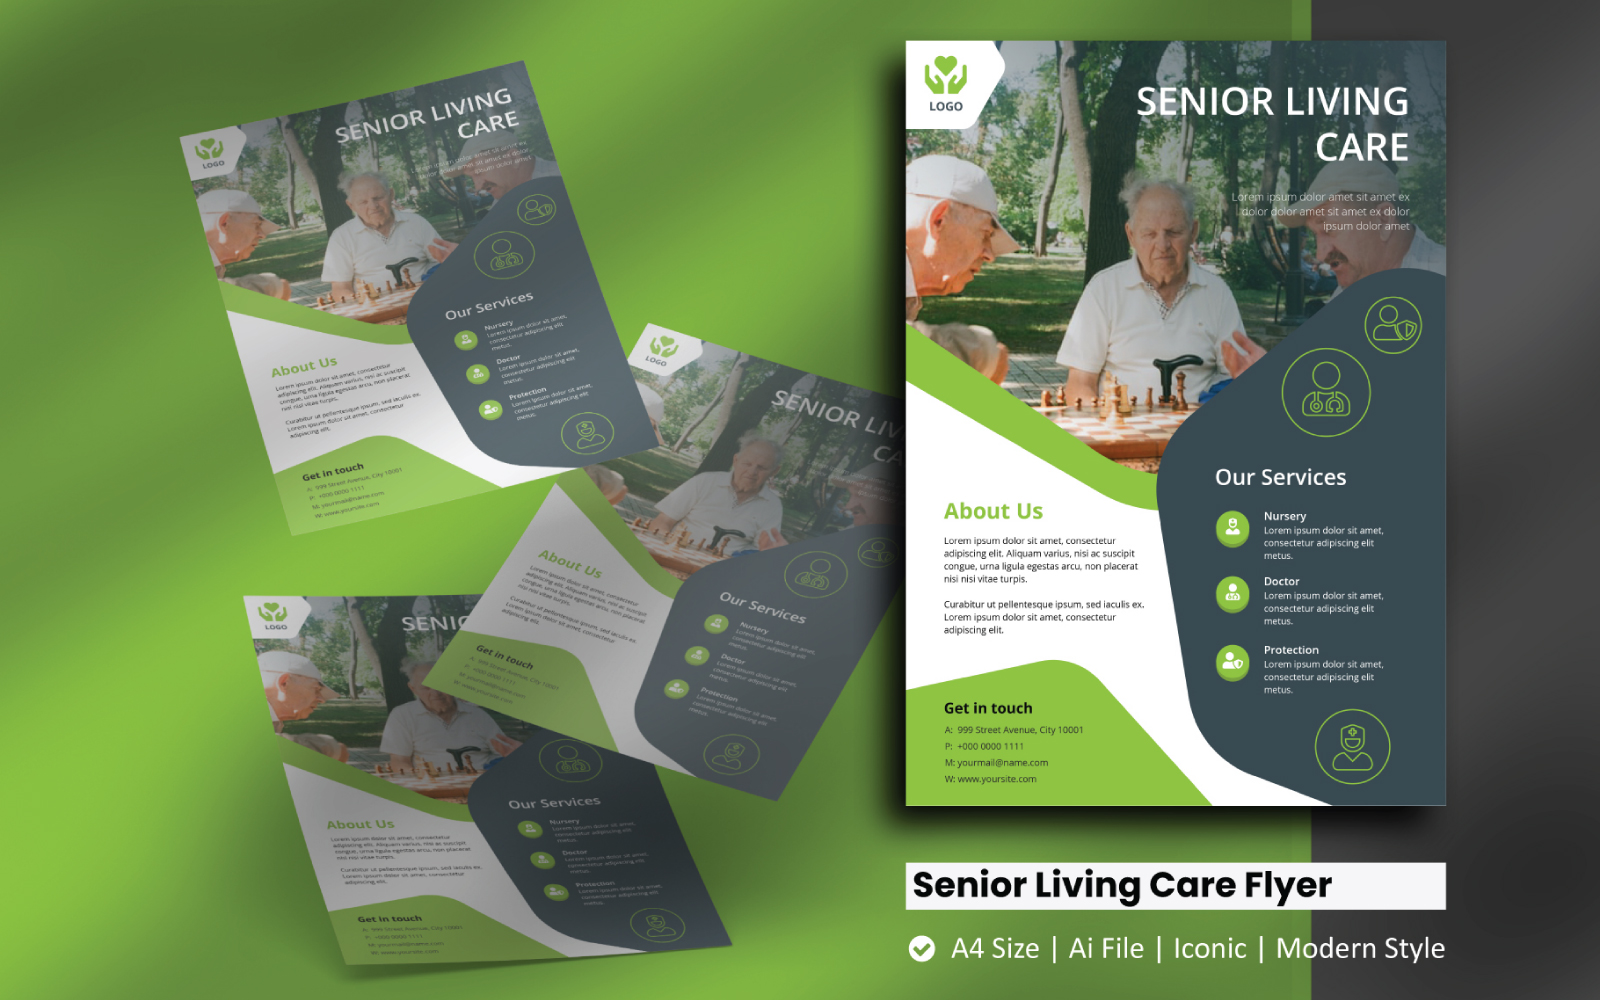 Senior Living Care Vol2 Flyer Corporate Identity Template